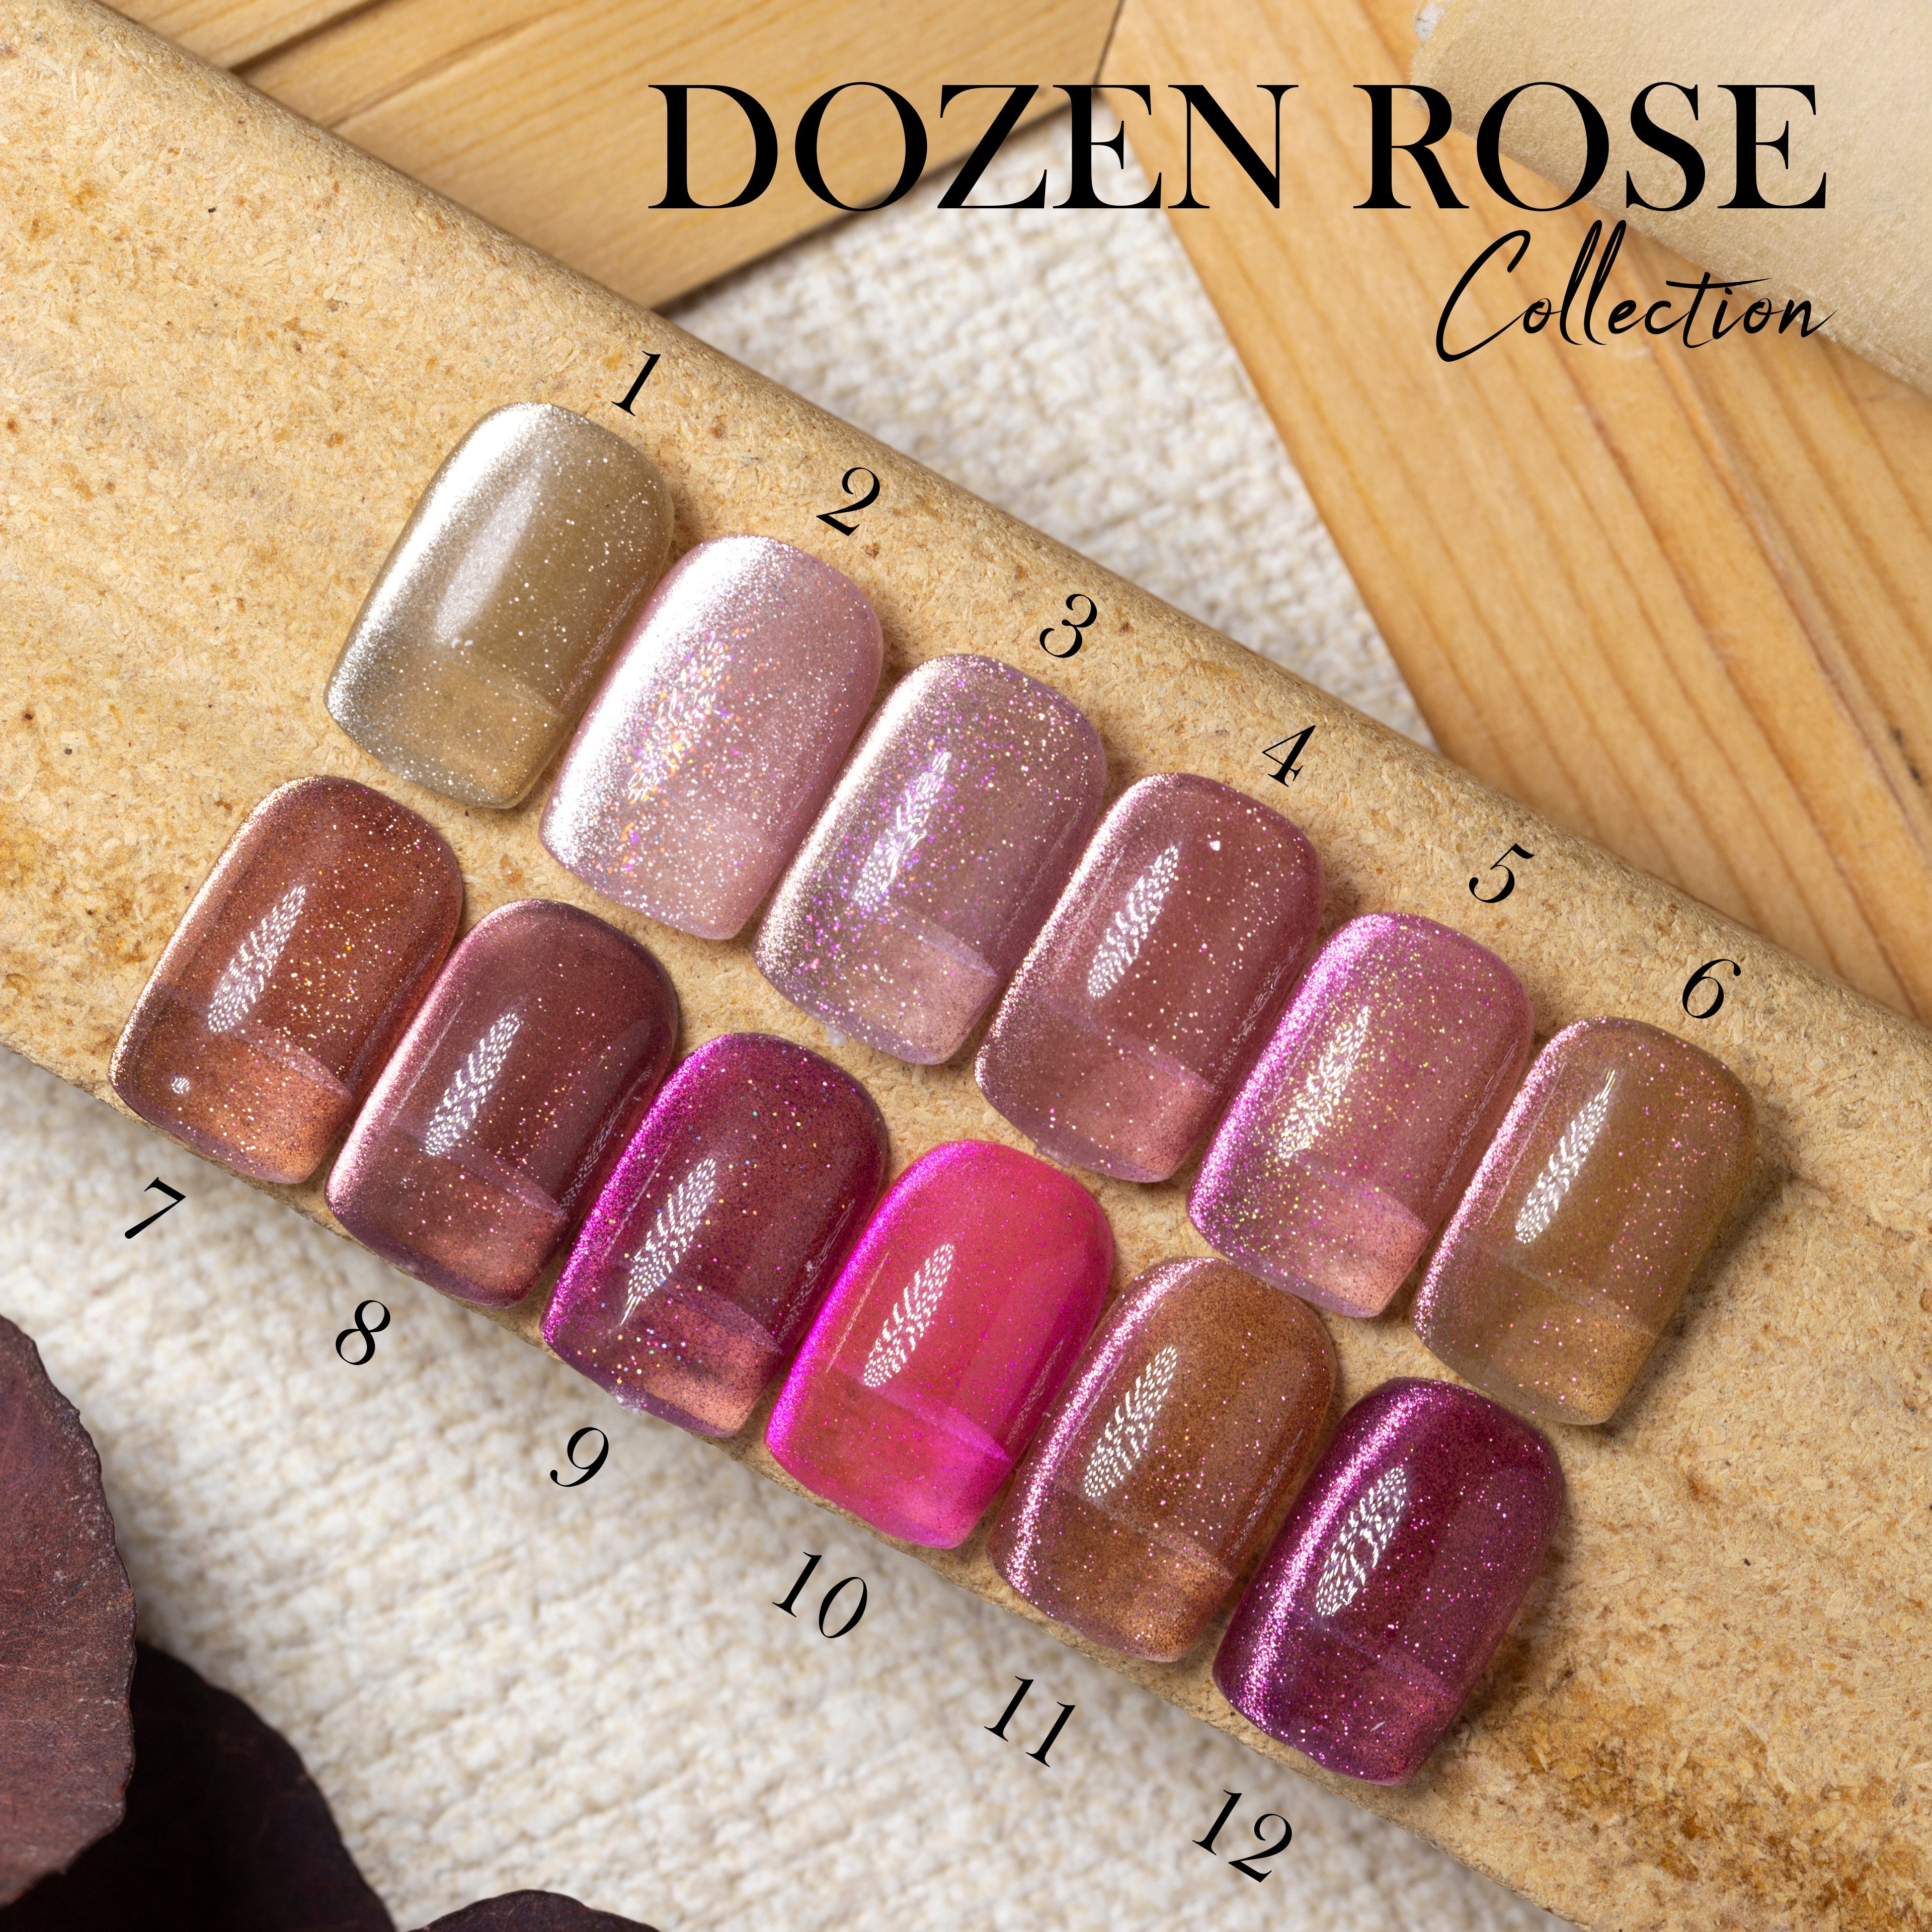 LDS DR09 - Gel Polish 0.5 oz - Dozen Rose Collection